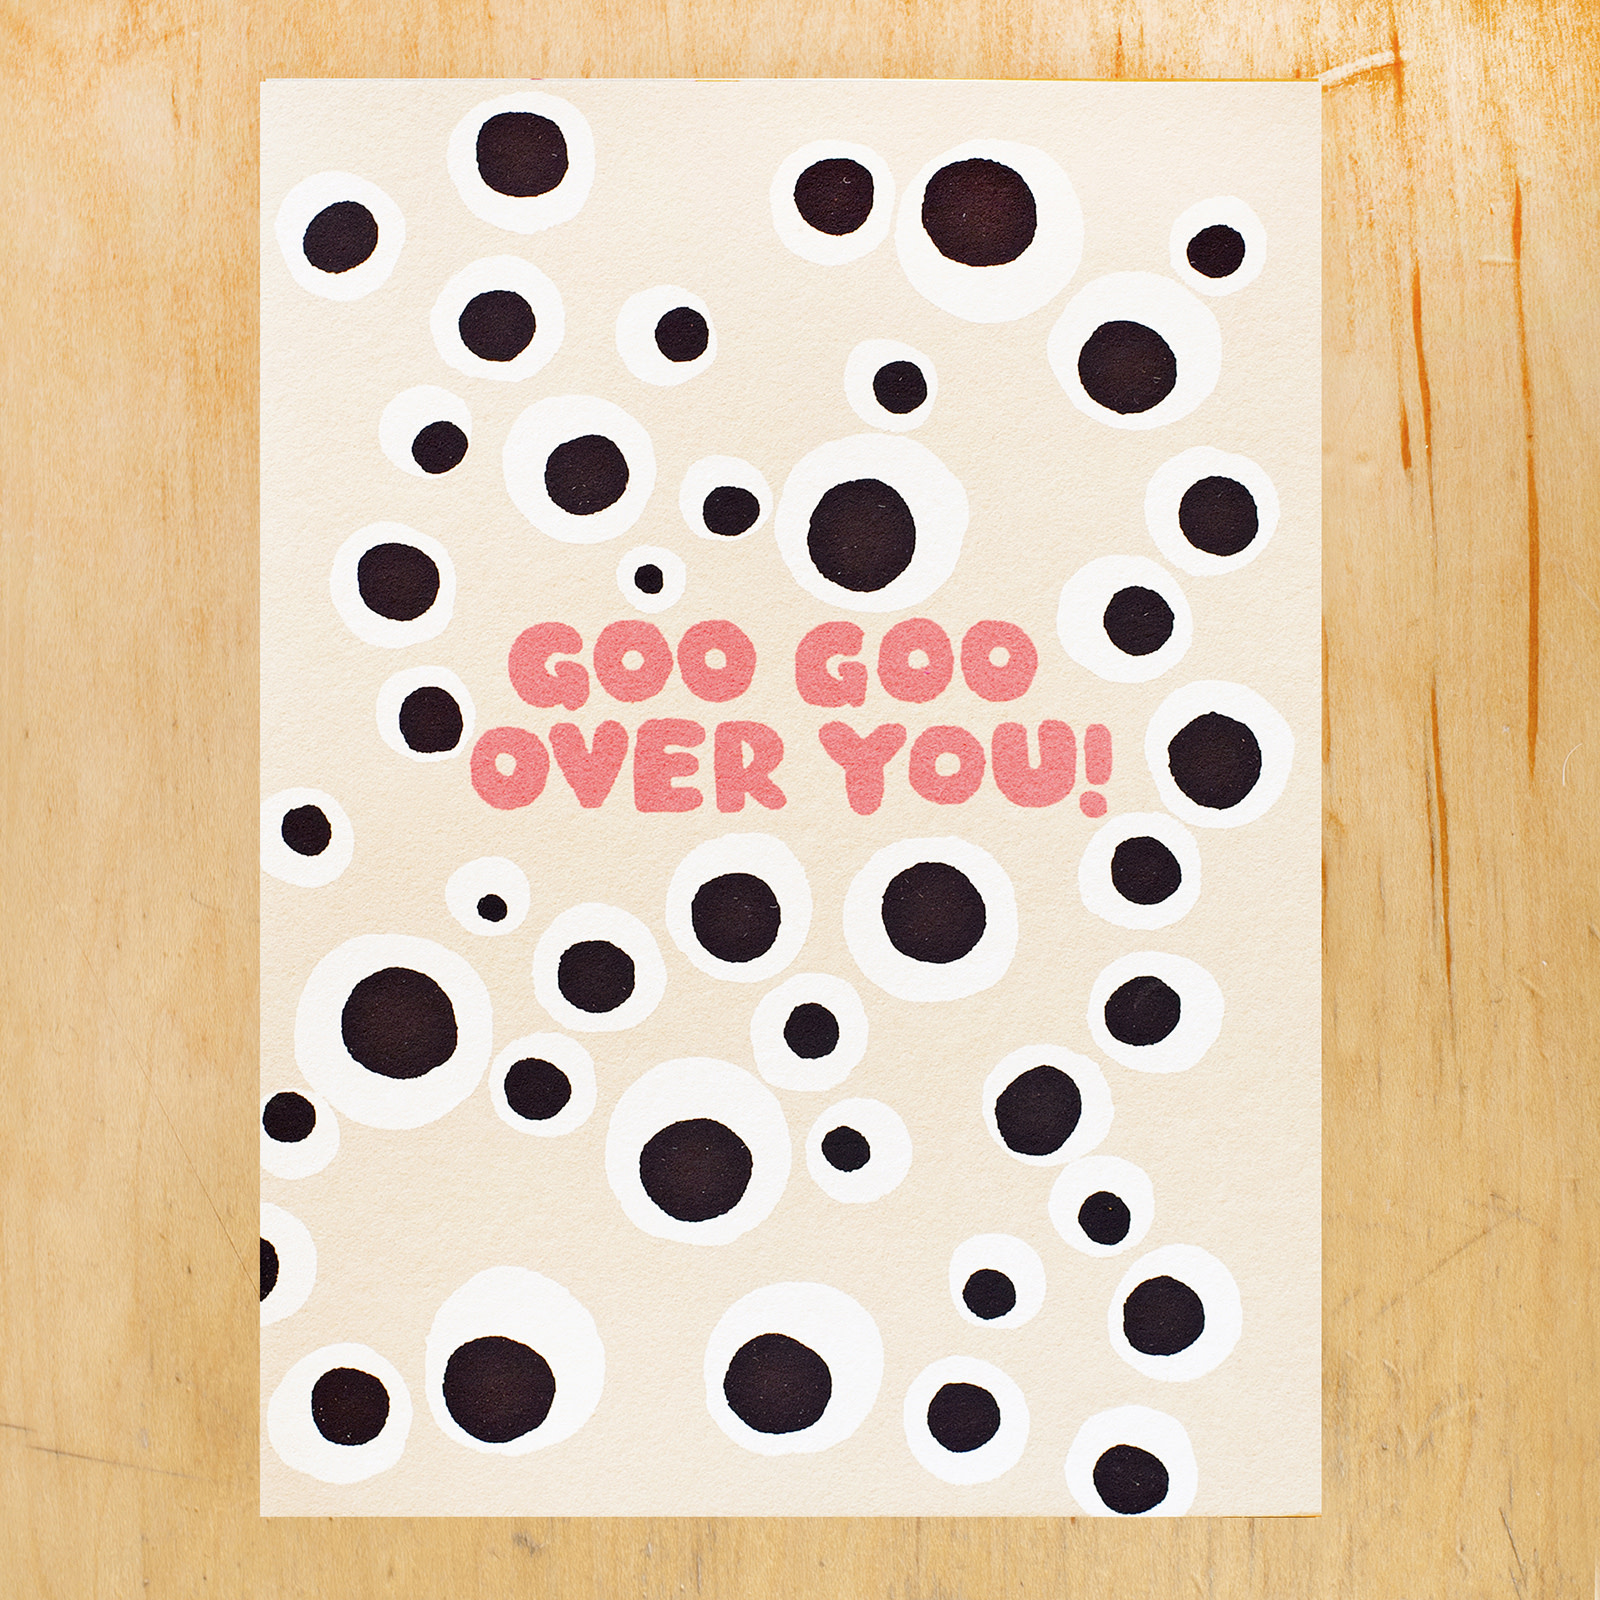 Gold Teeth Brooklyn - GTB GTBGCLO - Goo Goo Over You Goggly Eyes Card